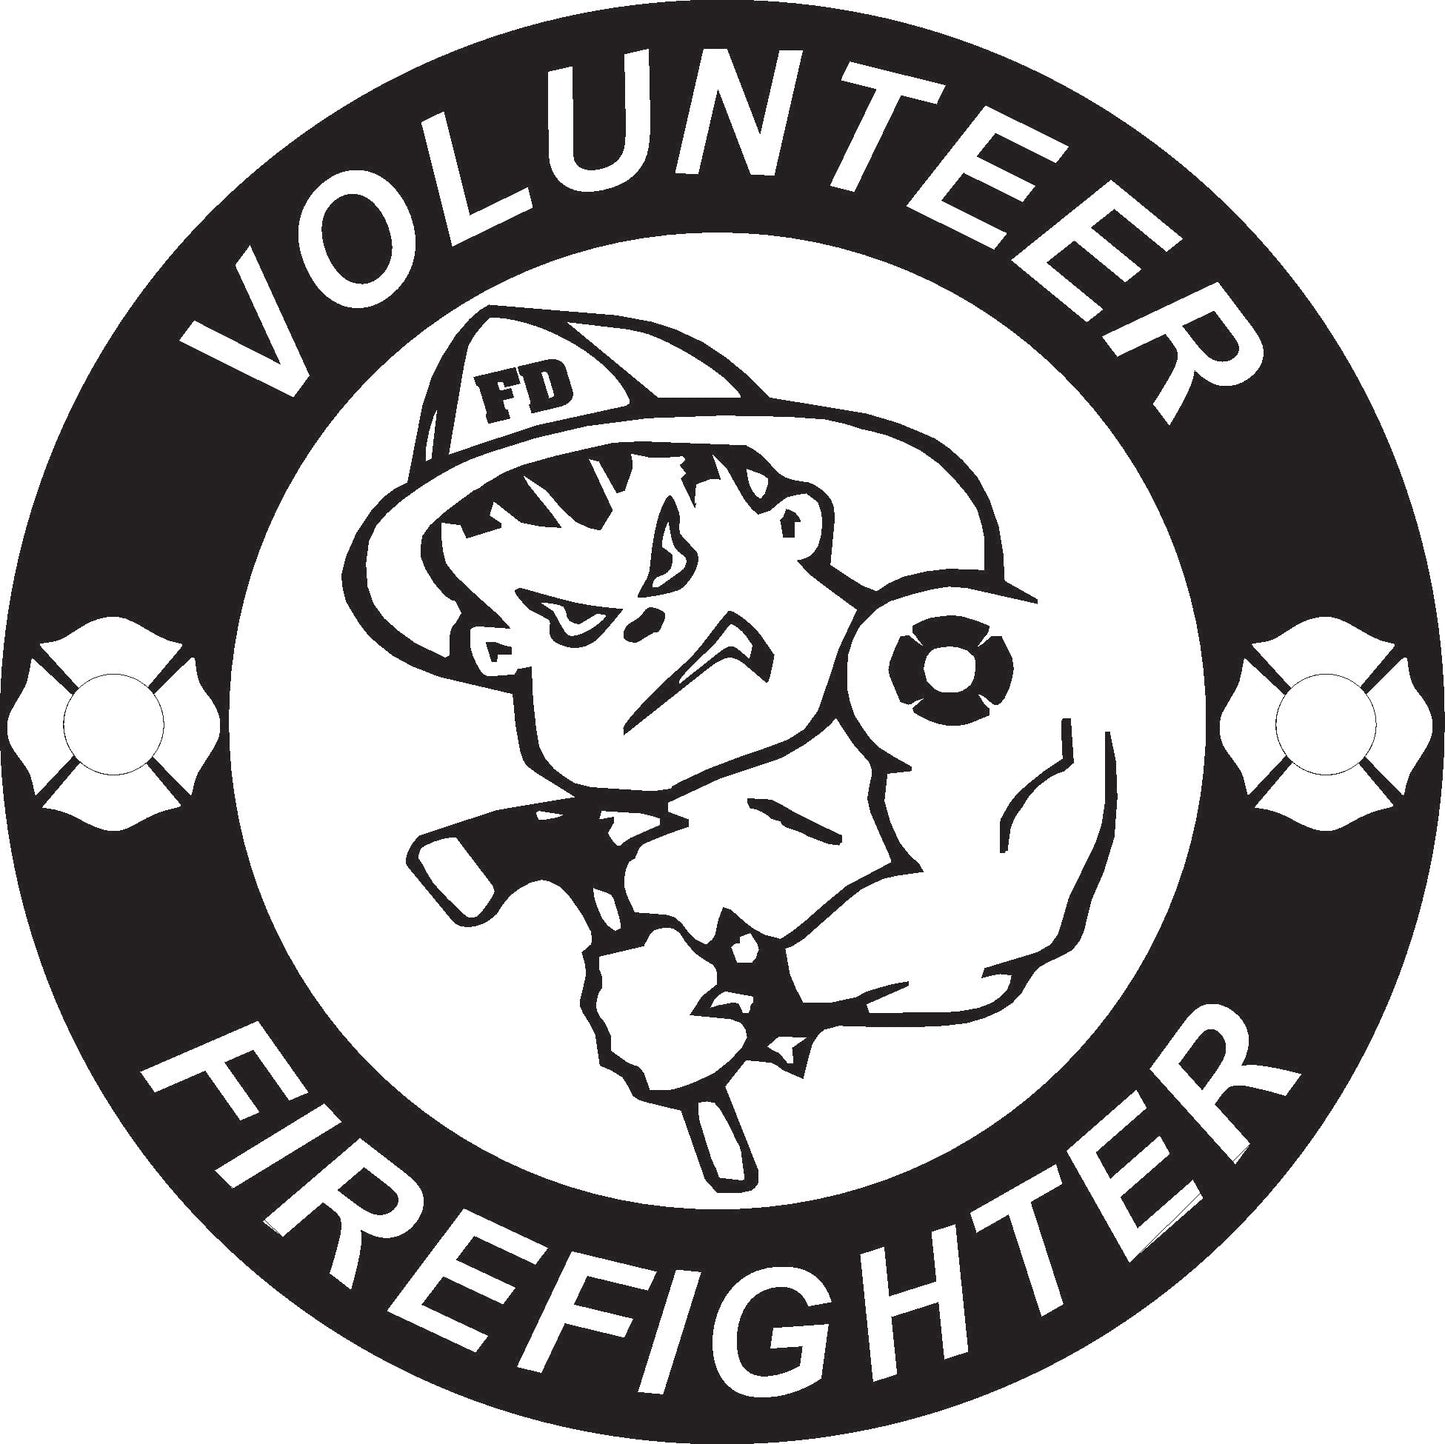 Volunteer Firefighter Decal / Sticker